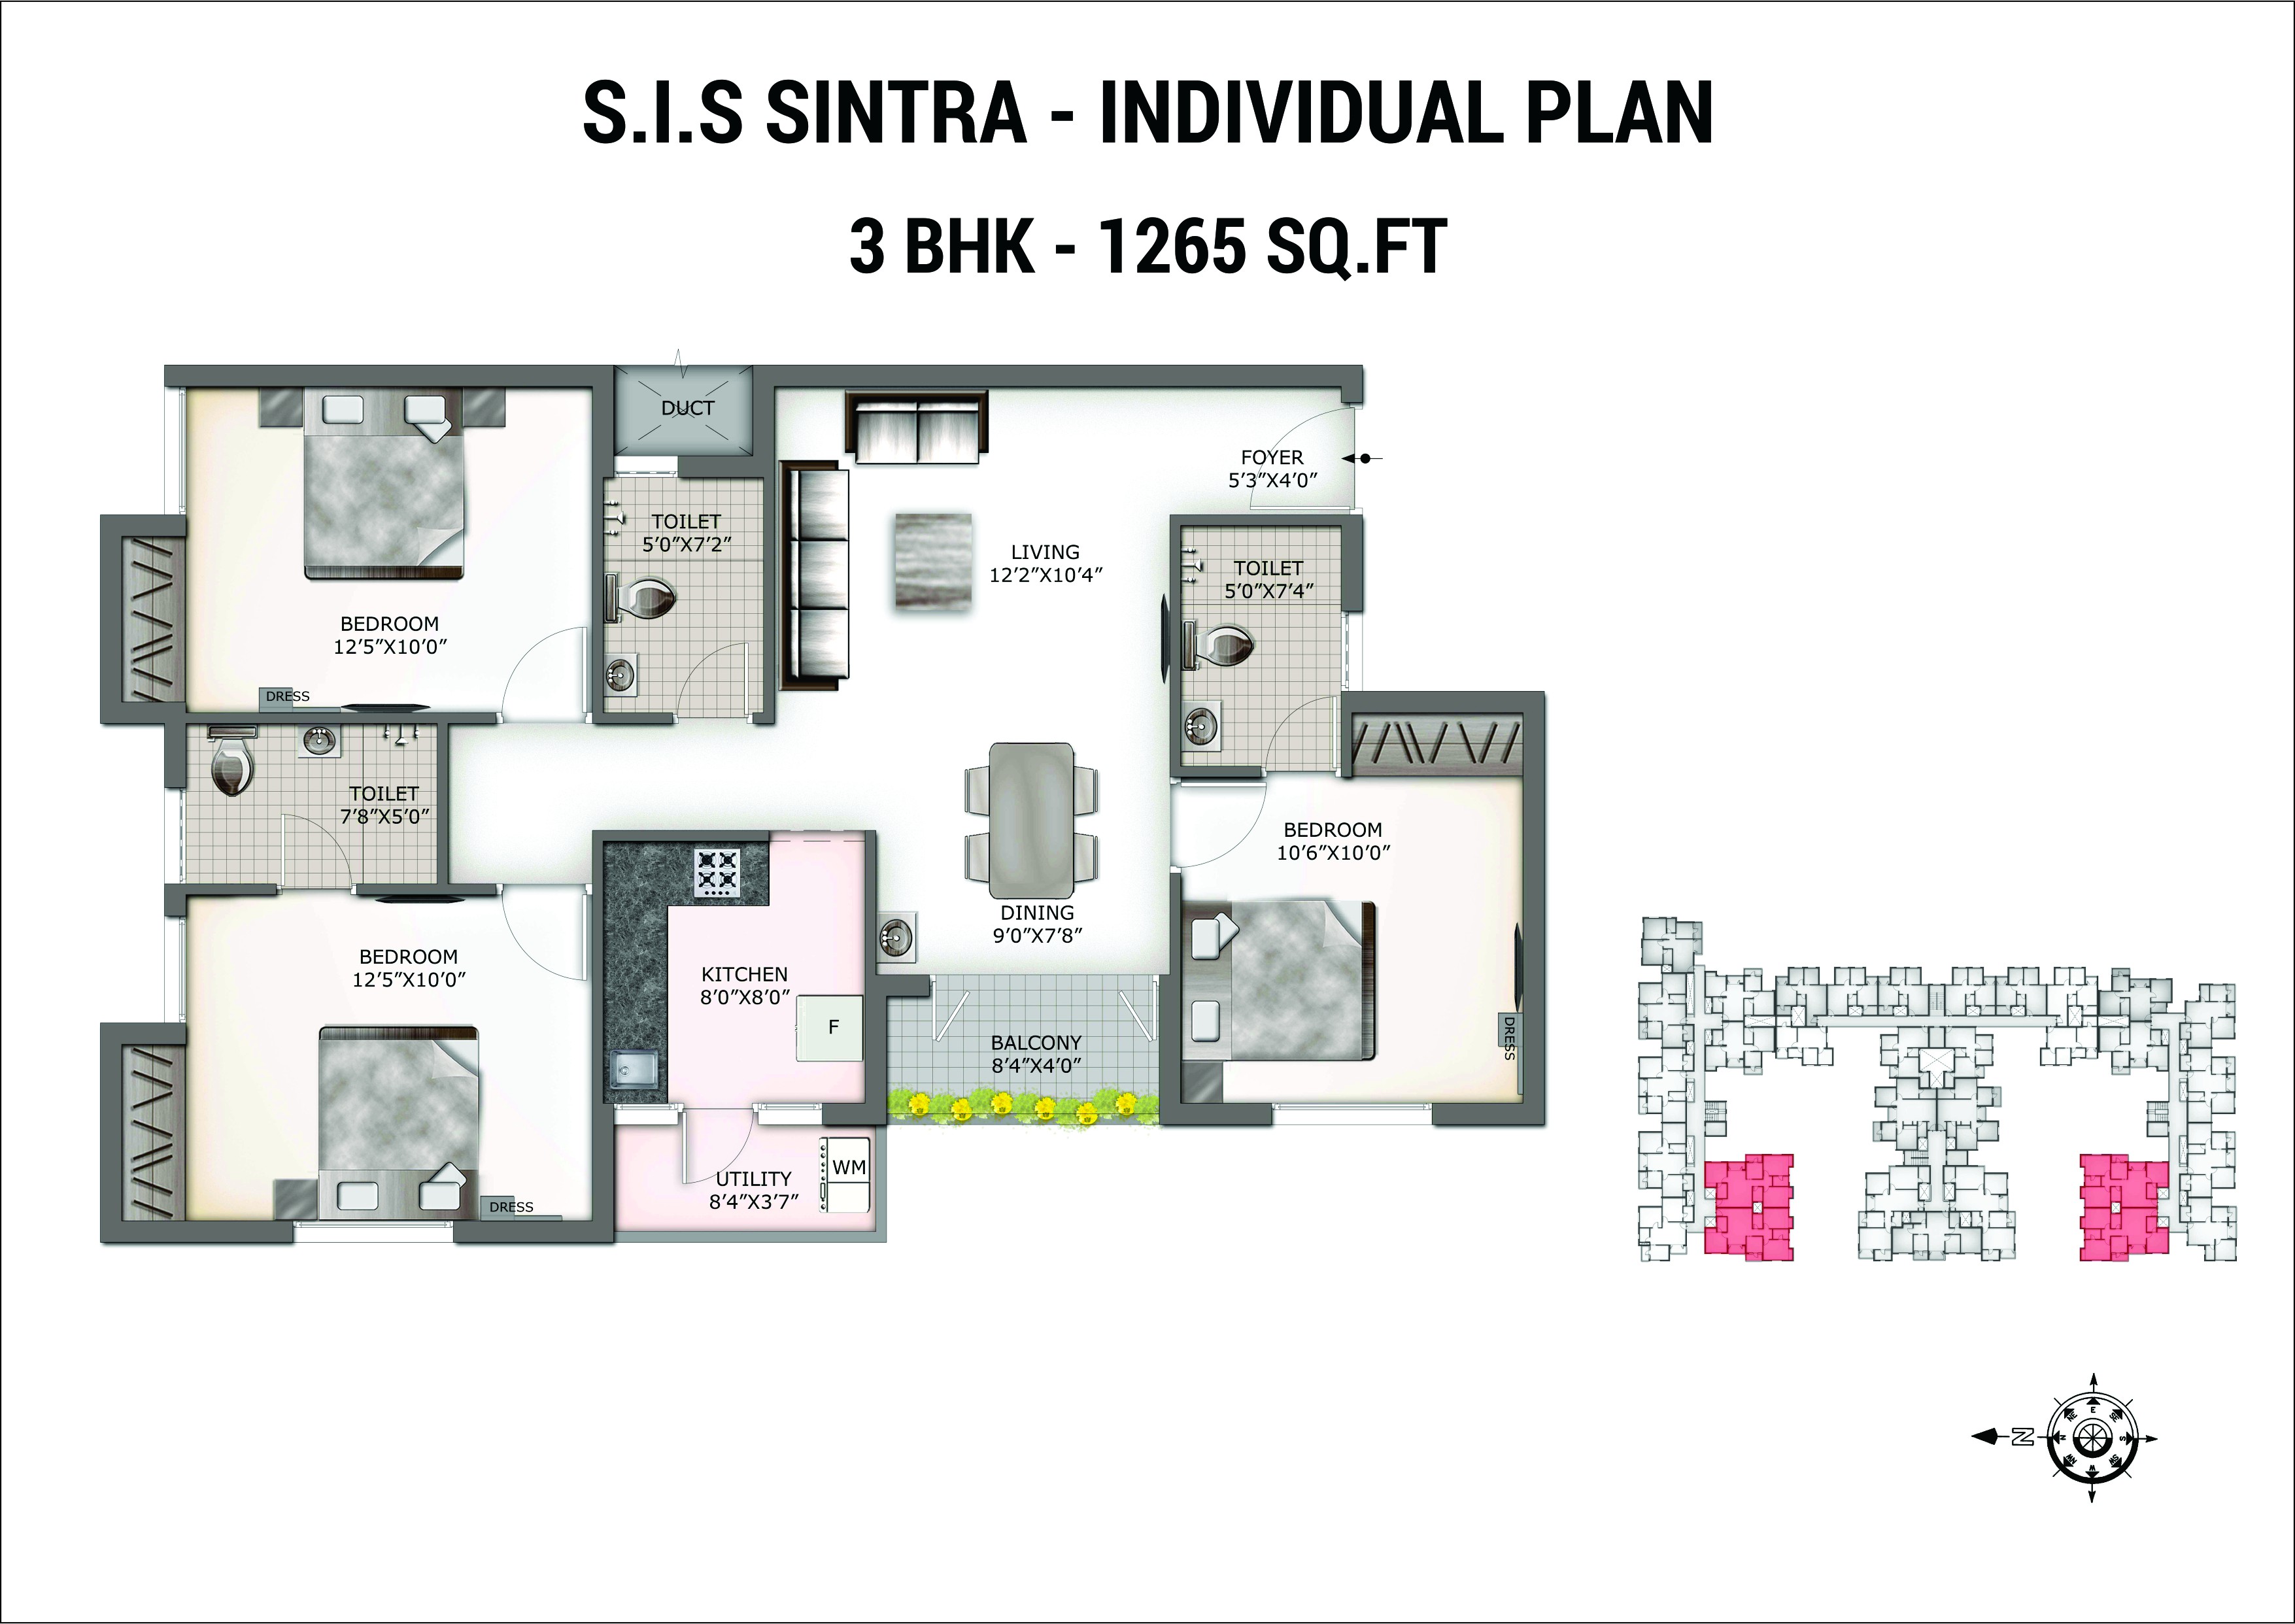 SIS Sintra floorplan 1265sqft south facing